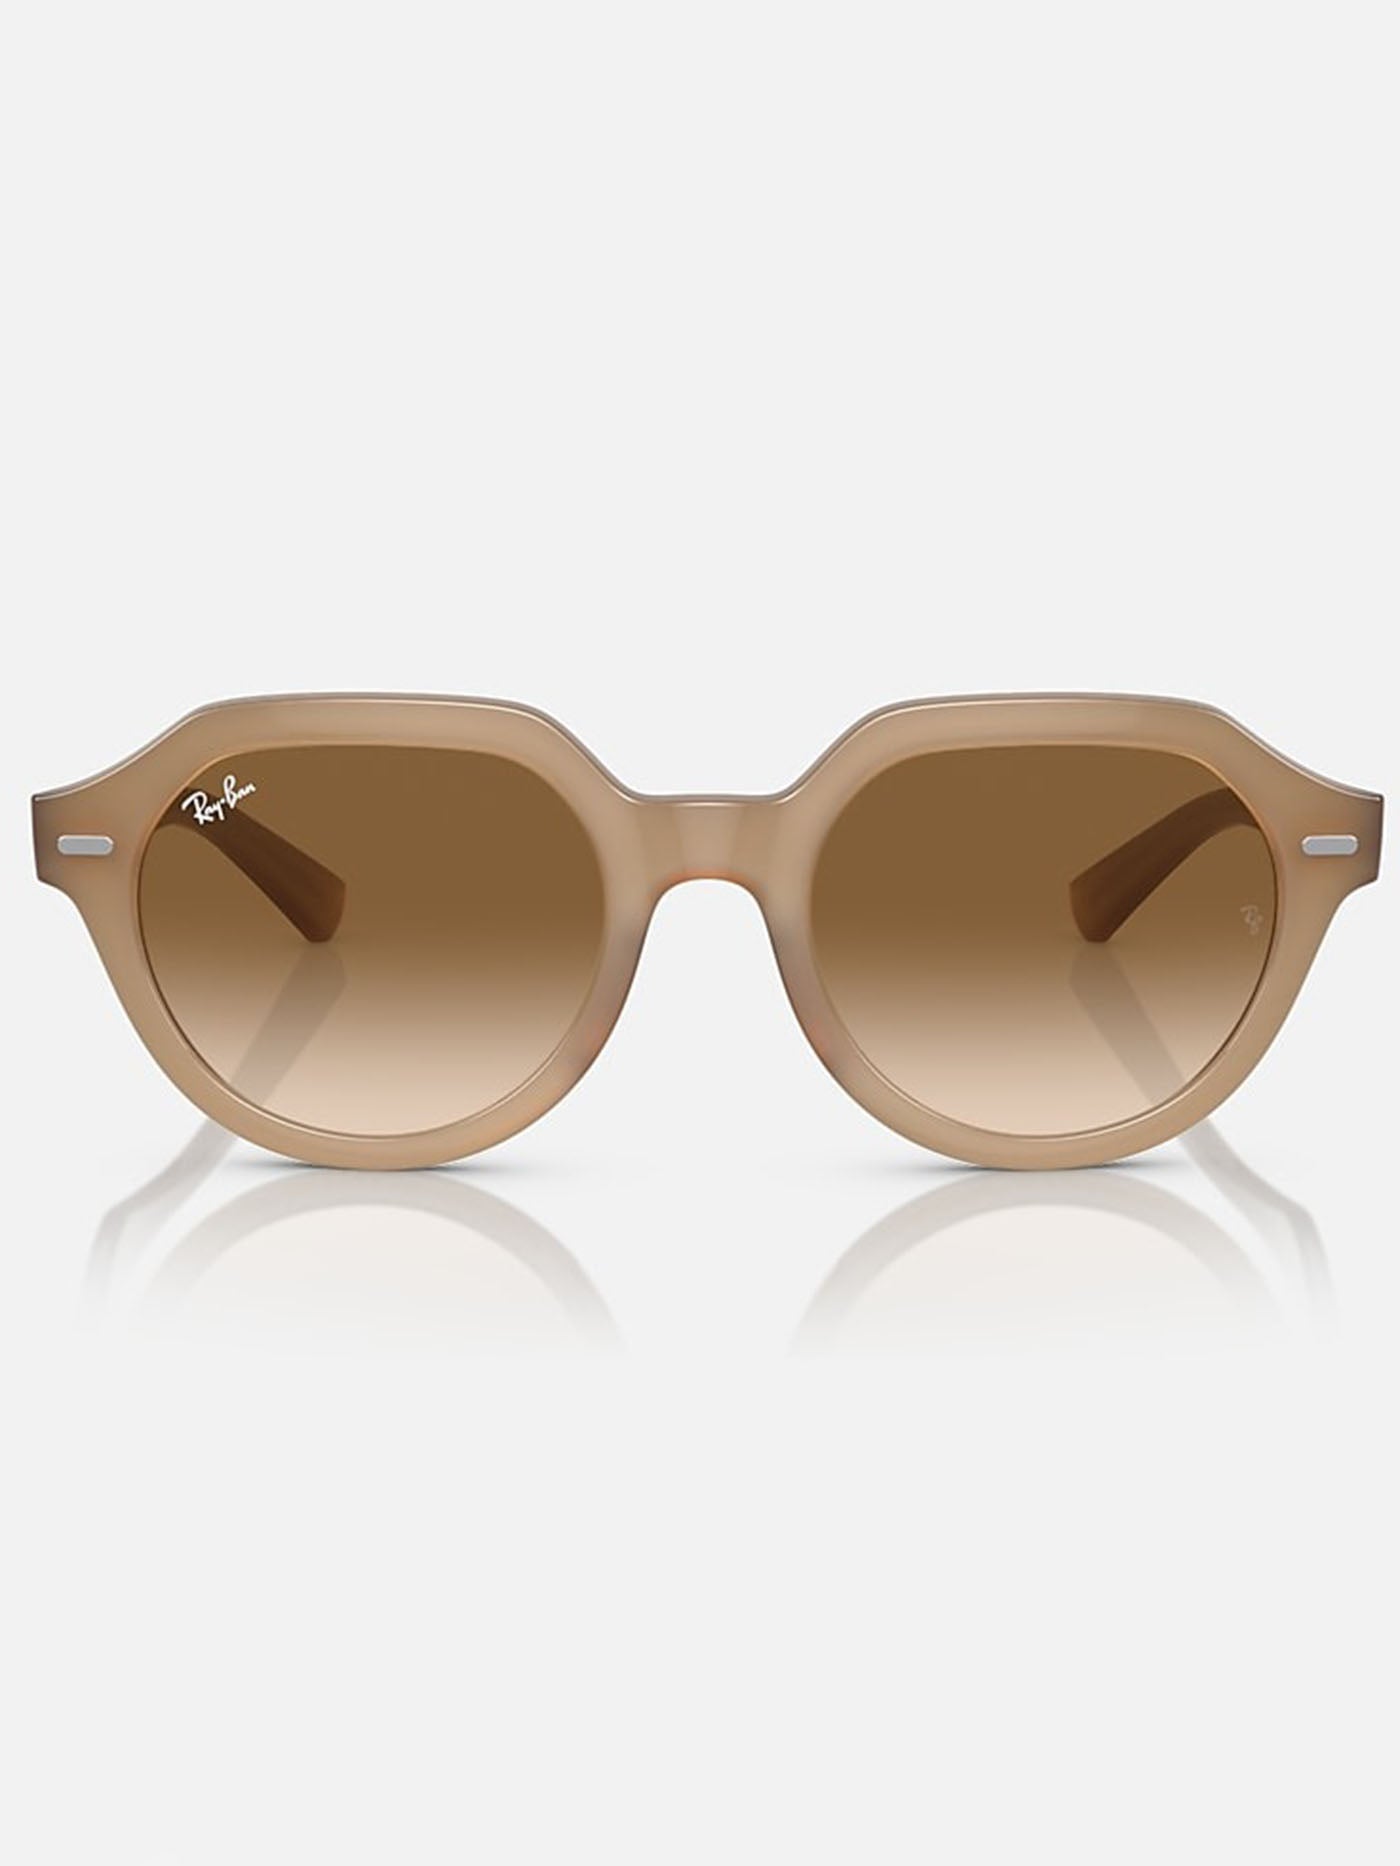 Ray Ban 2024 Gina Tortledove/Brown Gradient Sunglasses